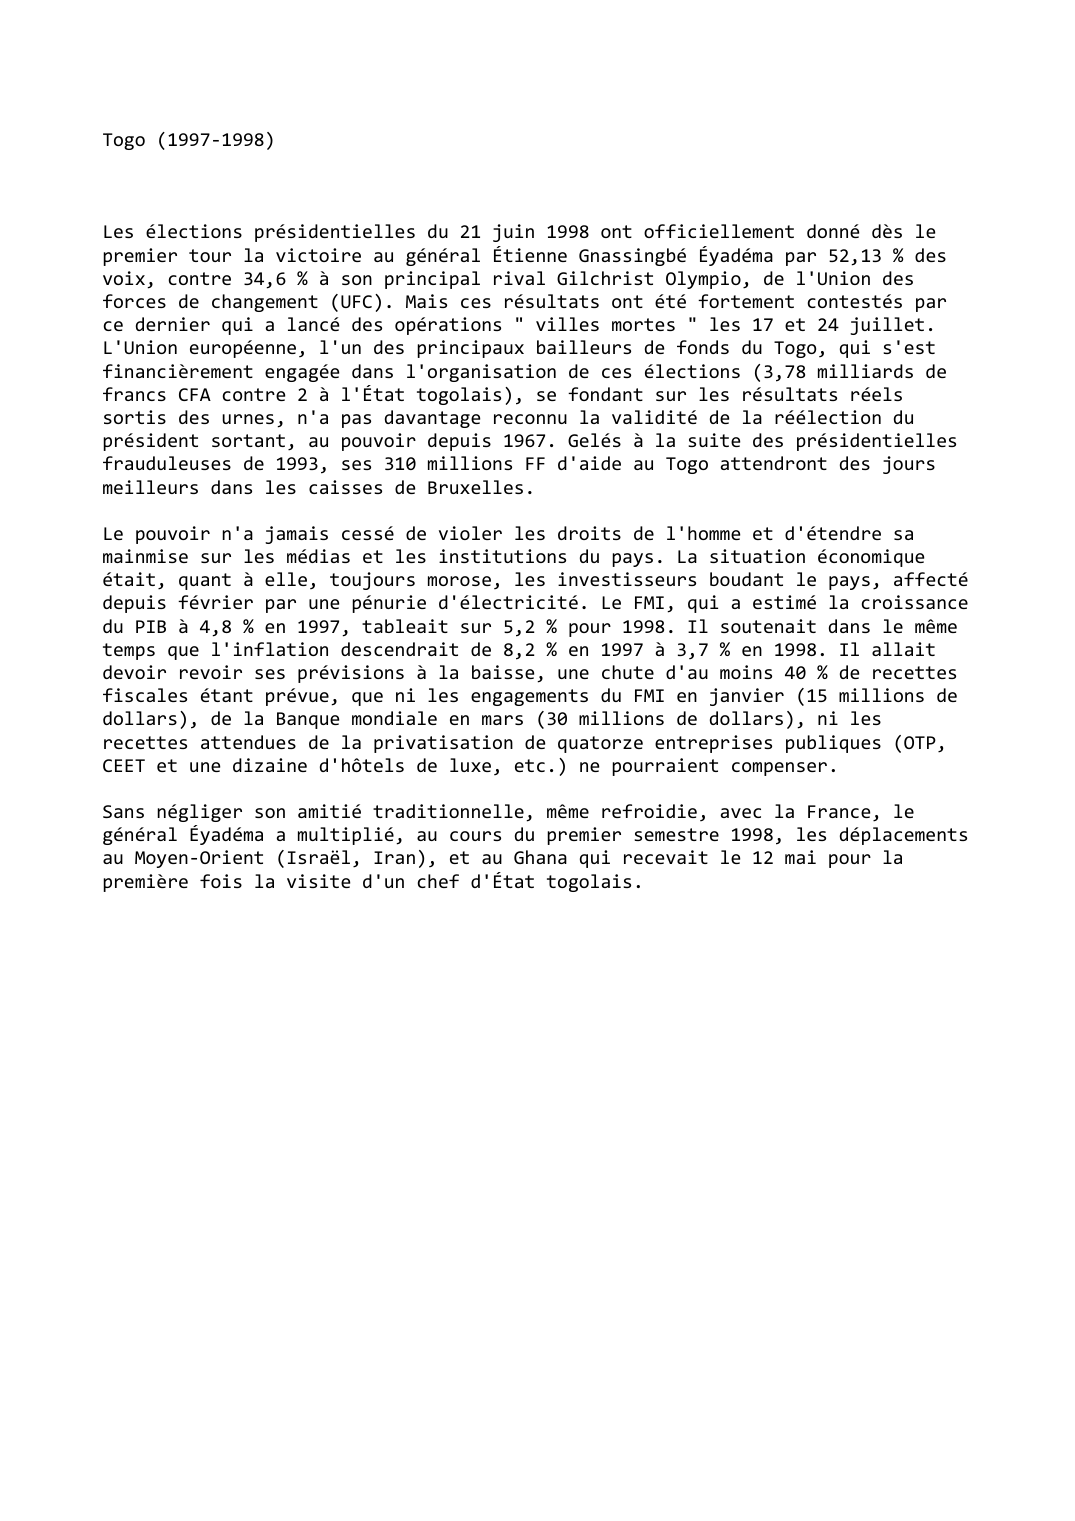 Prévisualisation du document Togo (1997-1998)